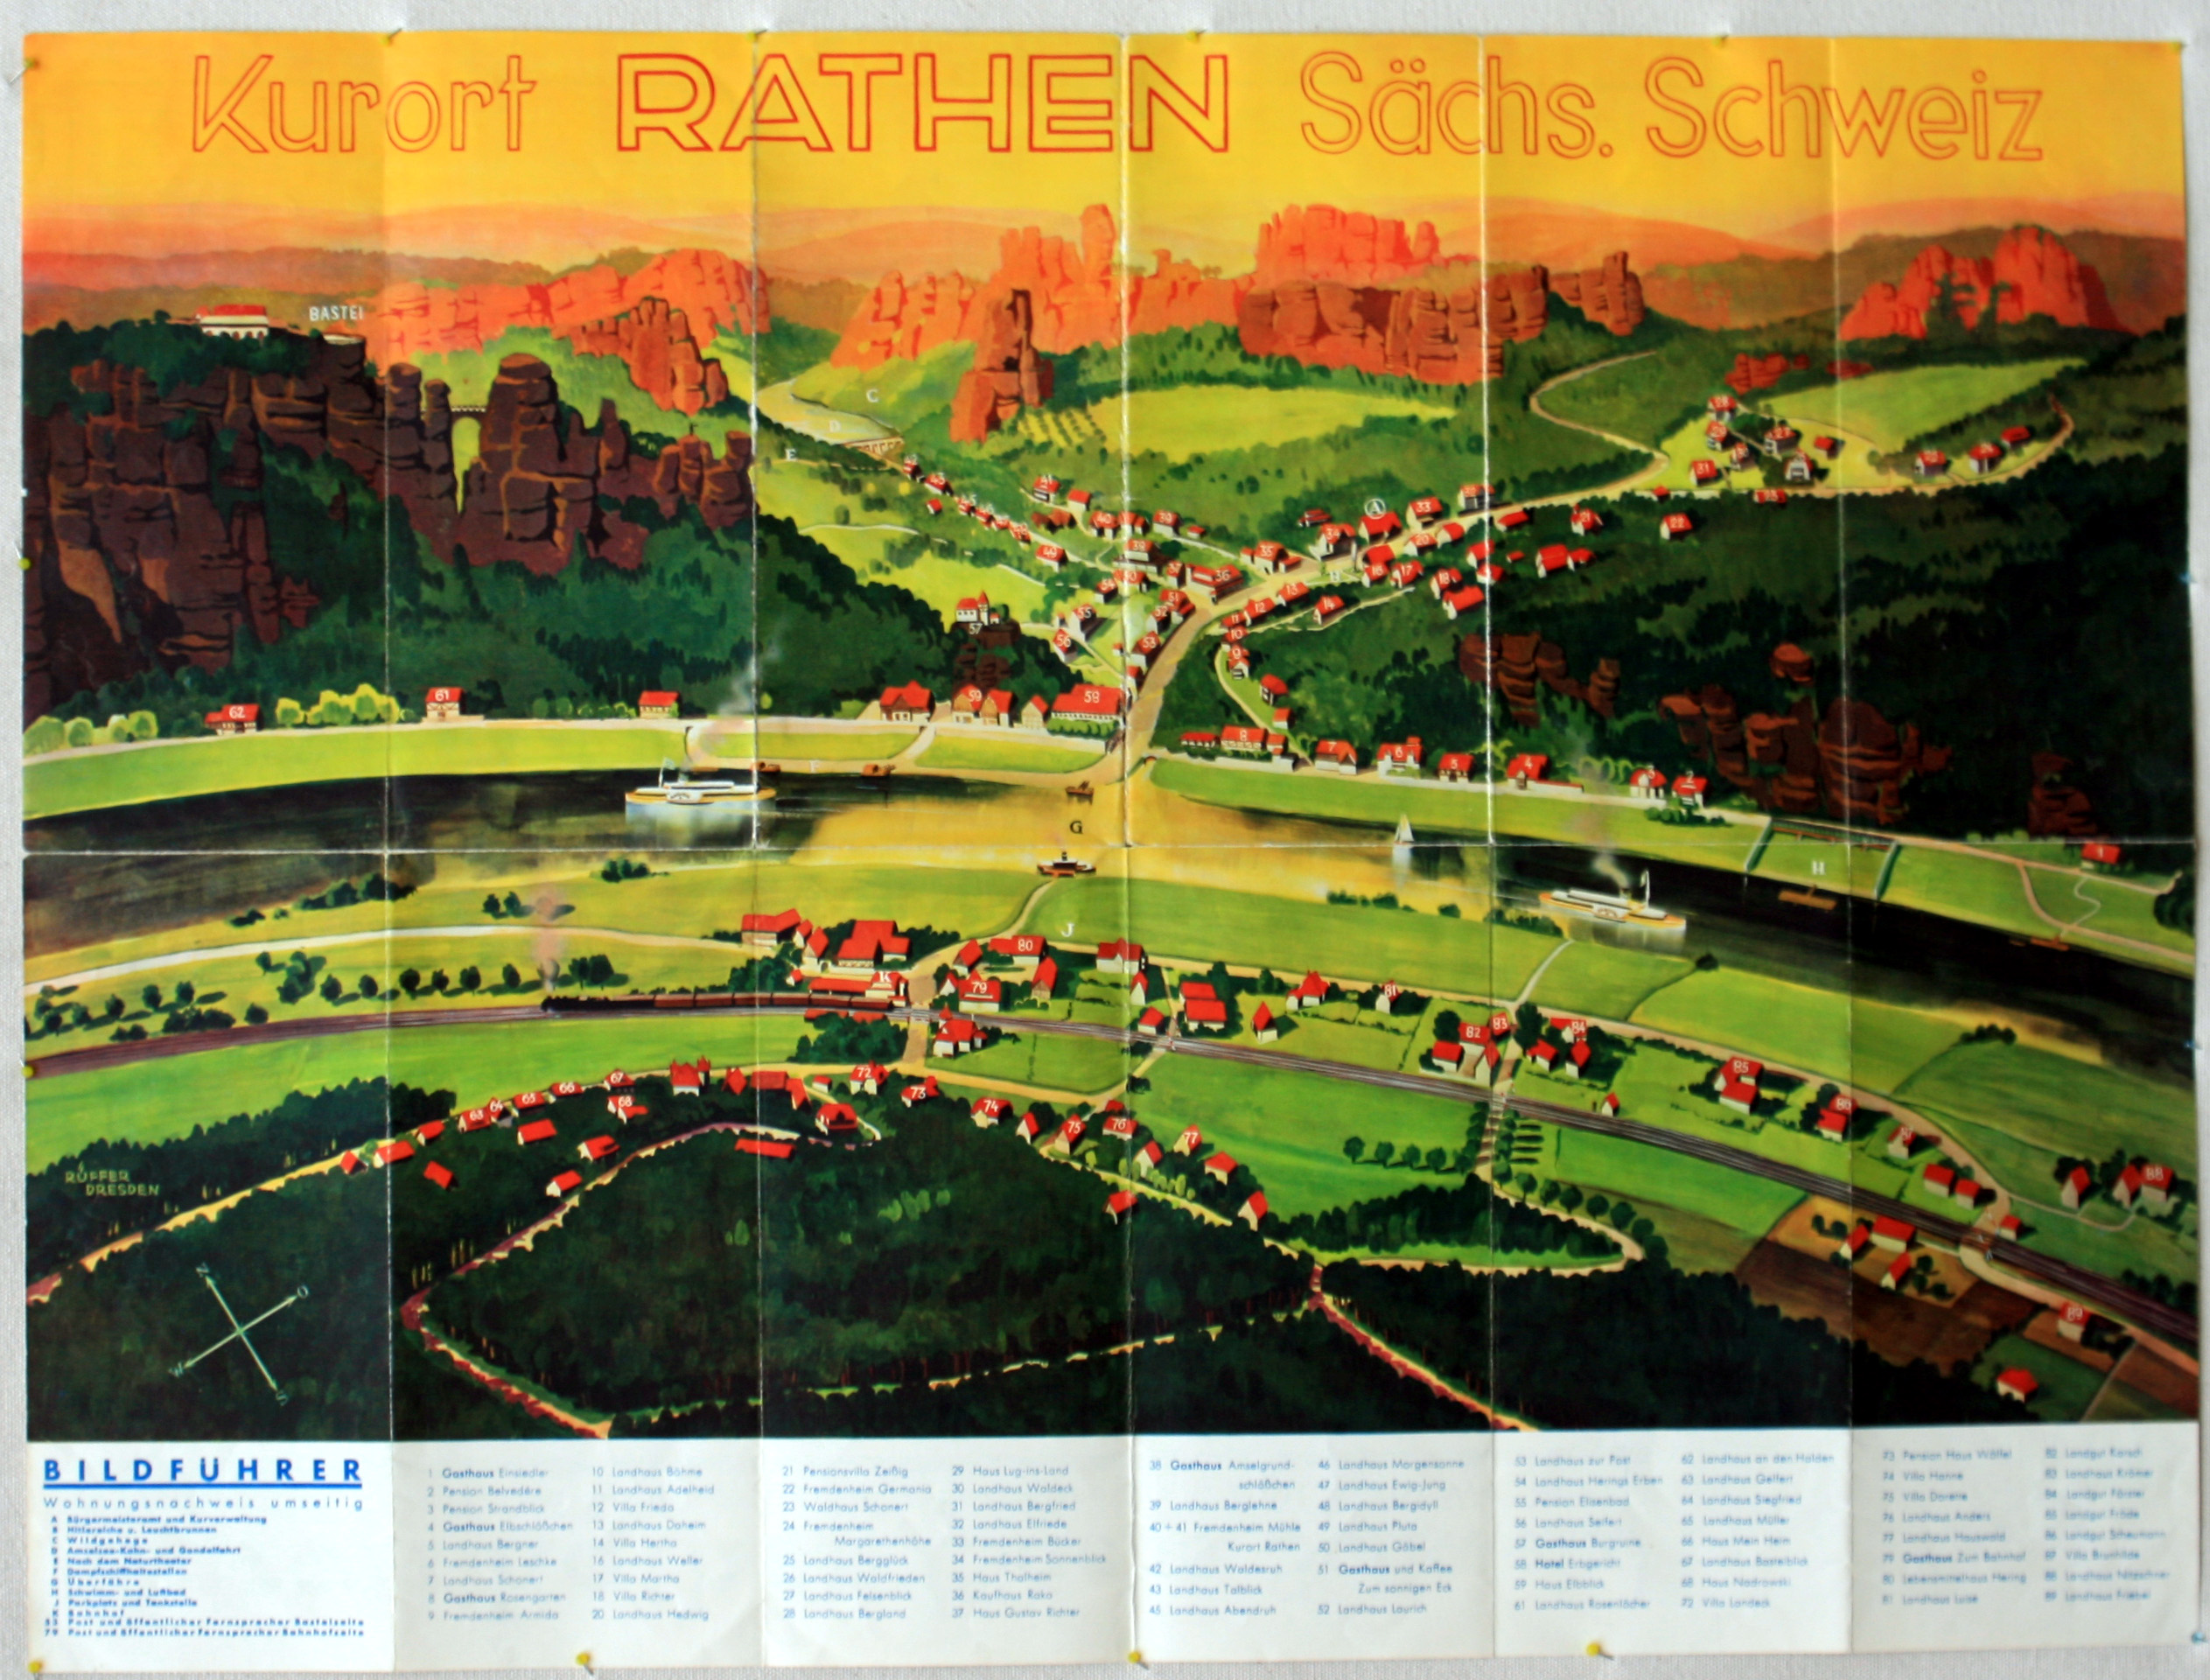 Travel Poster Kurort Rathen Switzerland